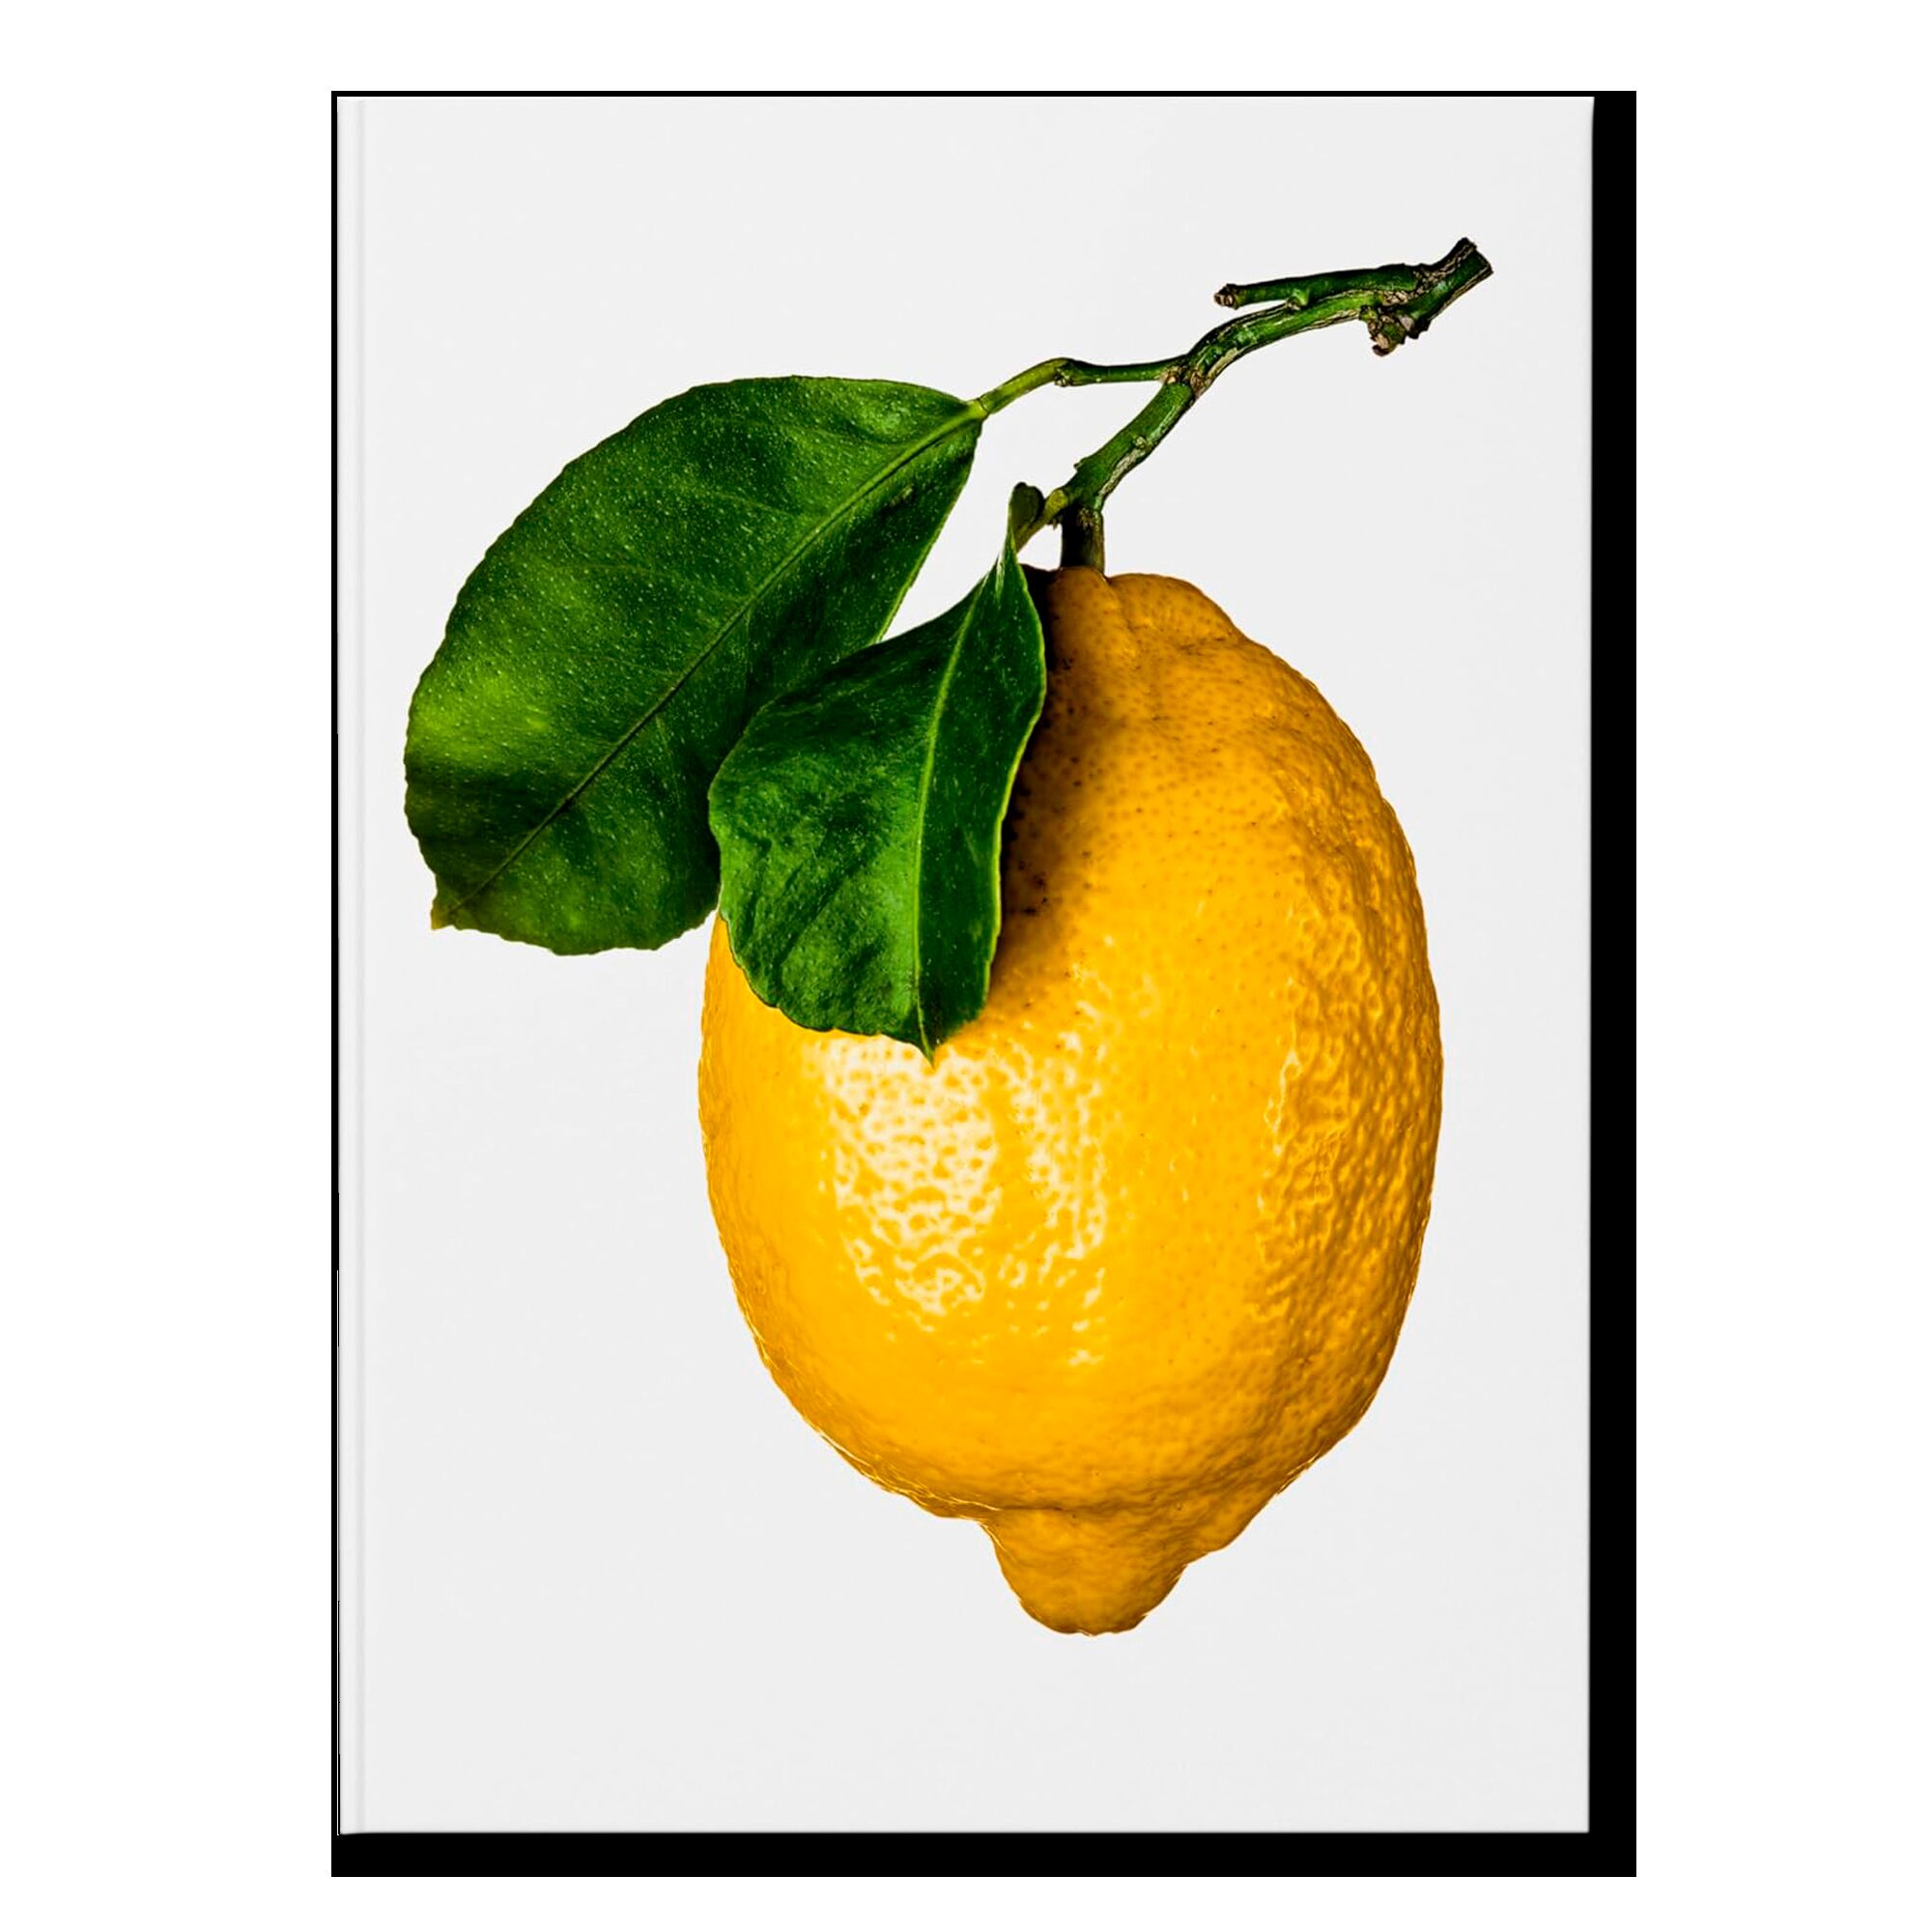 The Gourmand's Lemon